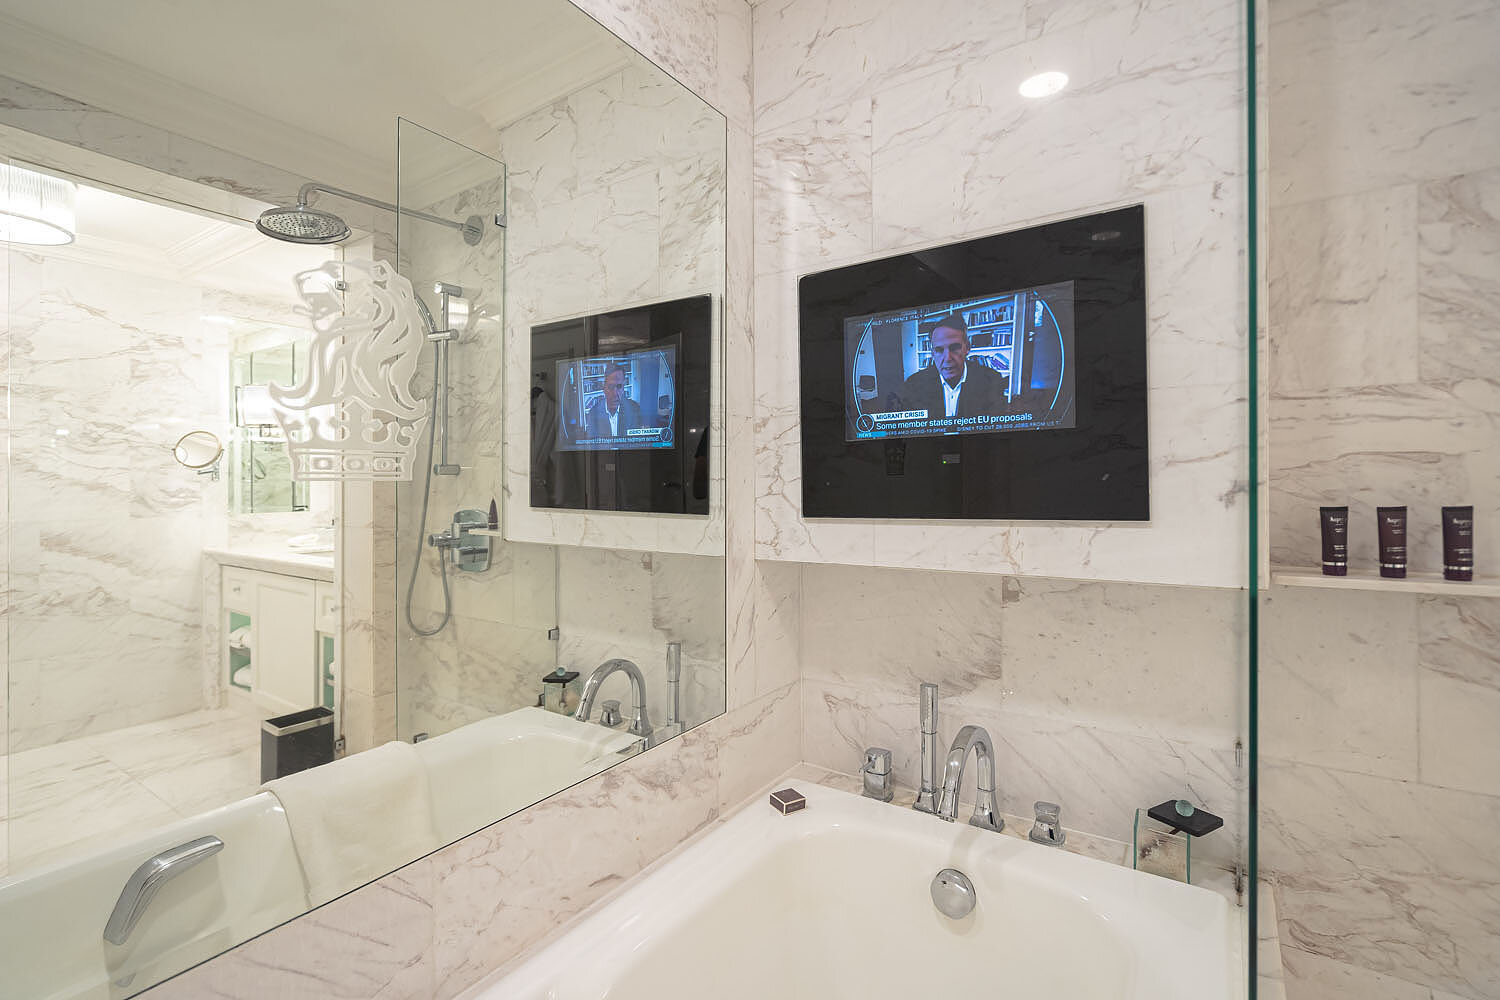 Television at the bathtub